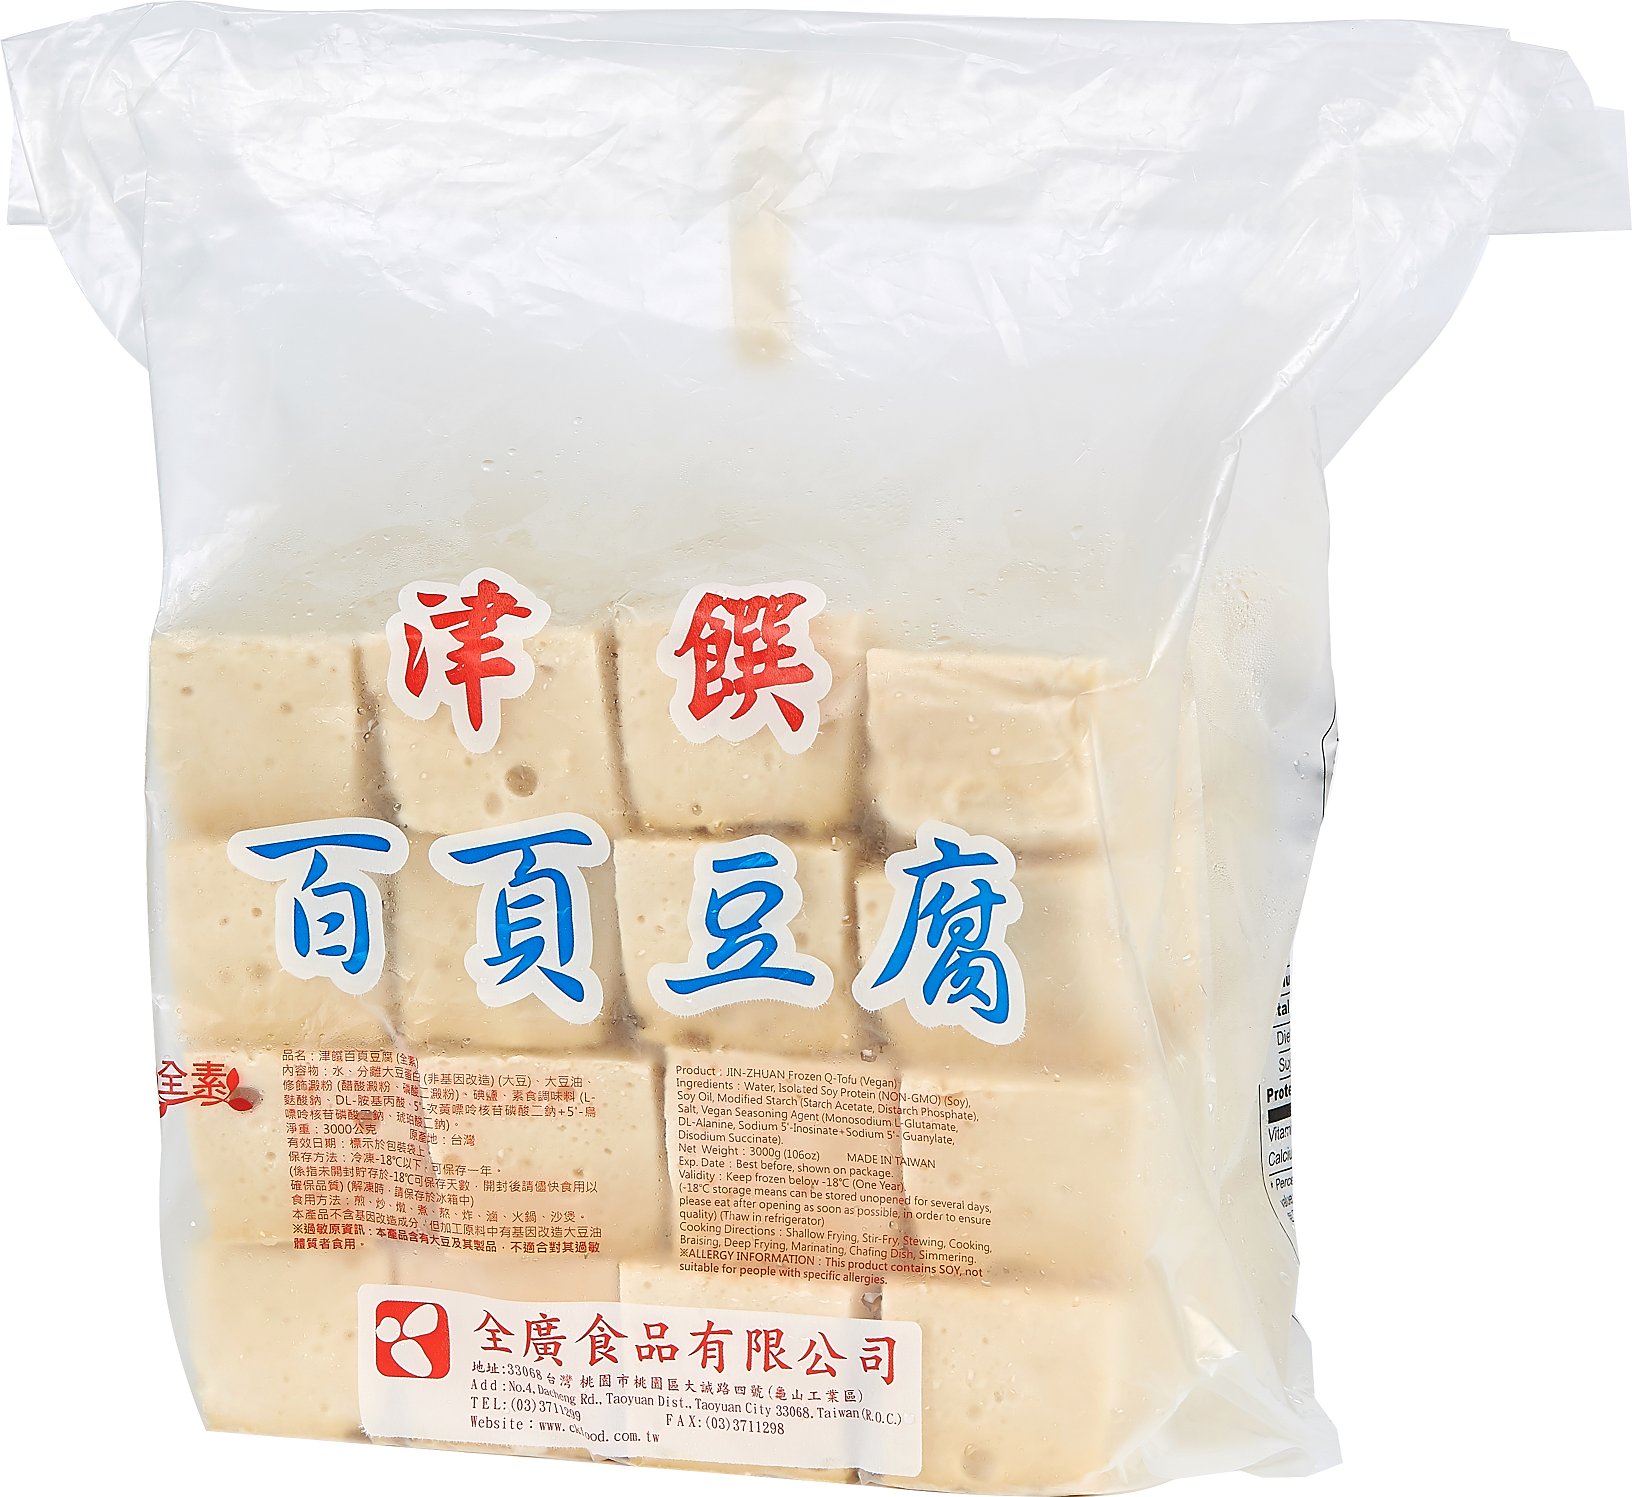 Image CK Tofu 全广 - 百页 3000grams